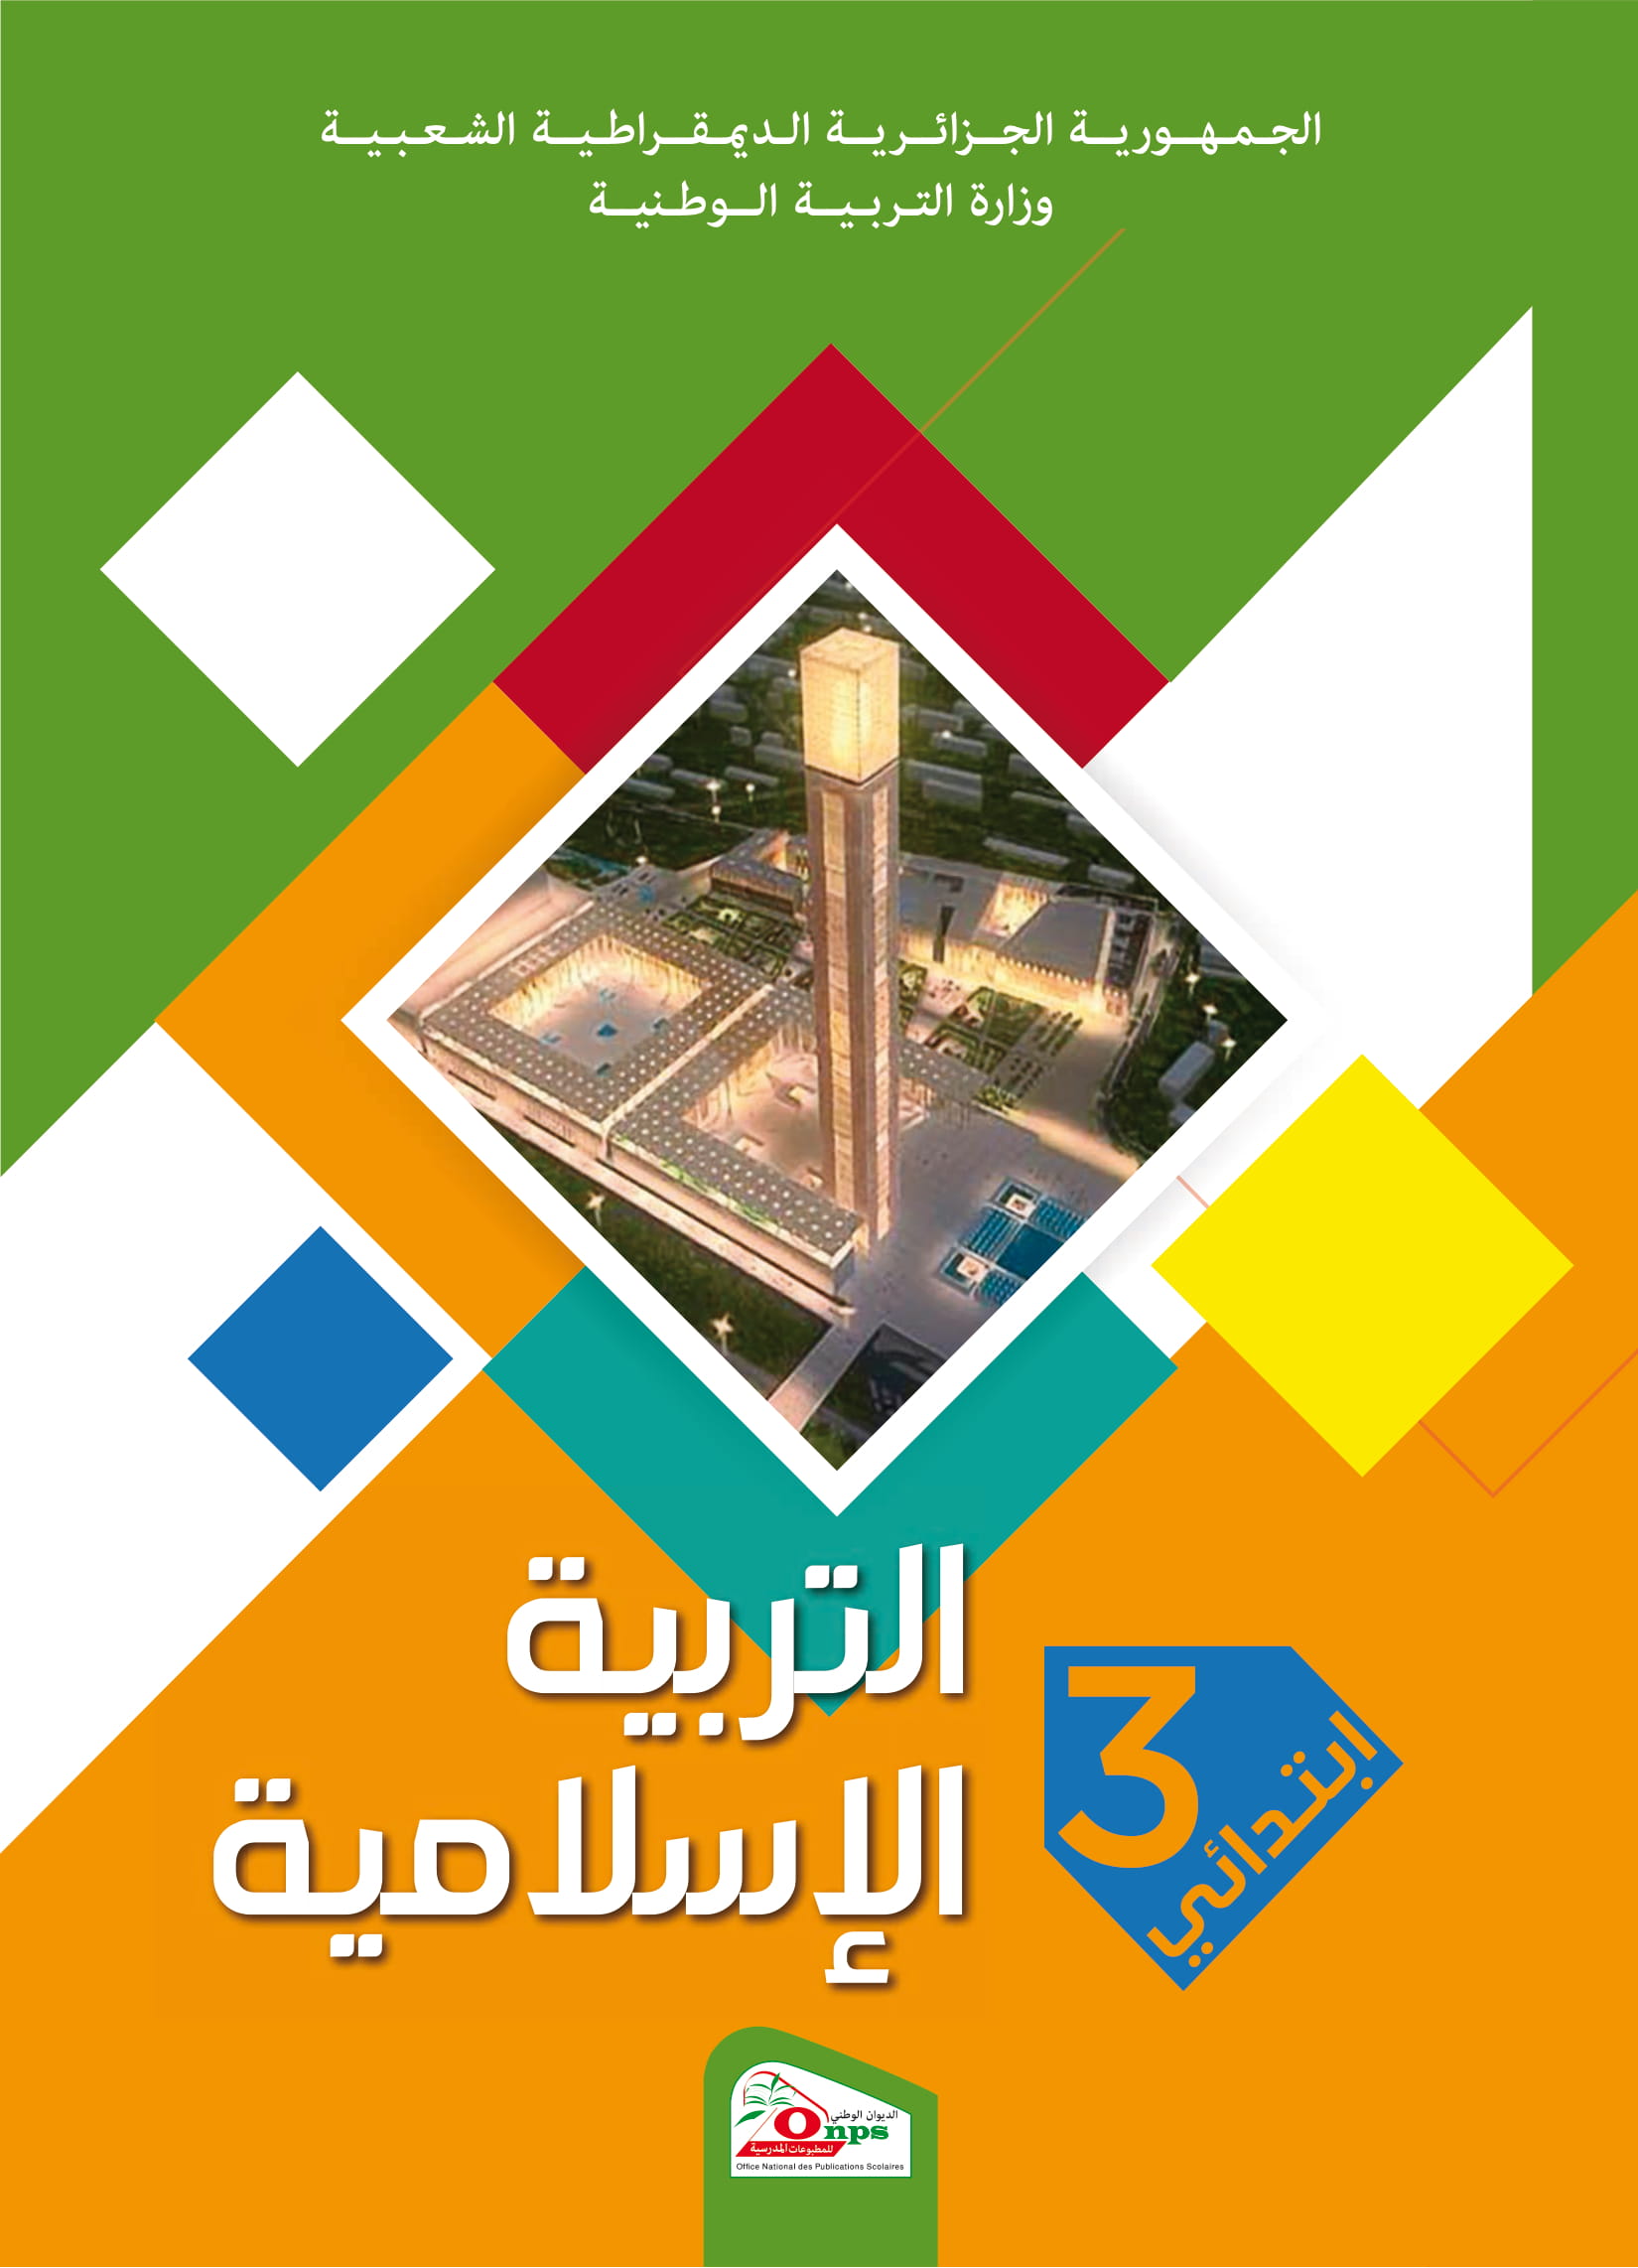 MS 305 Couverture Islam 3AP 1 - الديوان الوطني للمطبوعات المدرسية